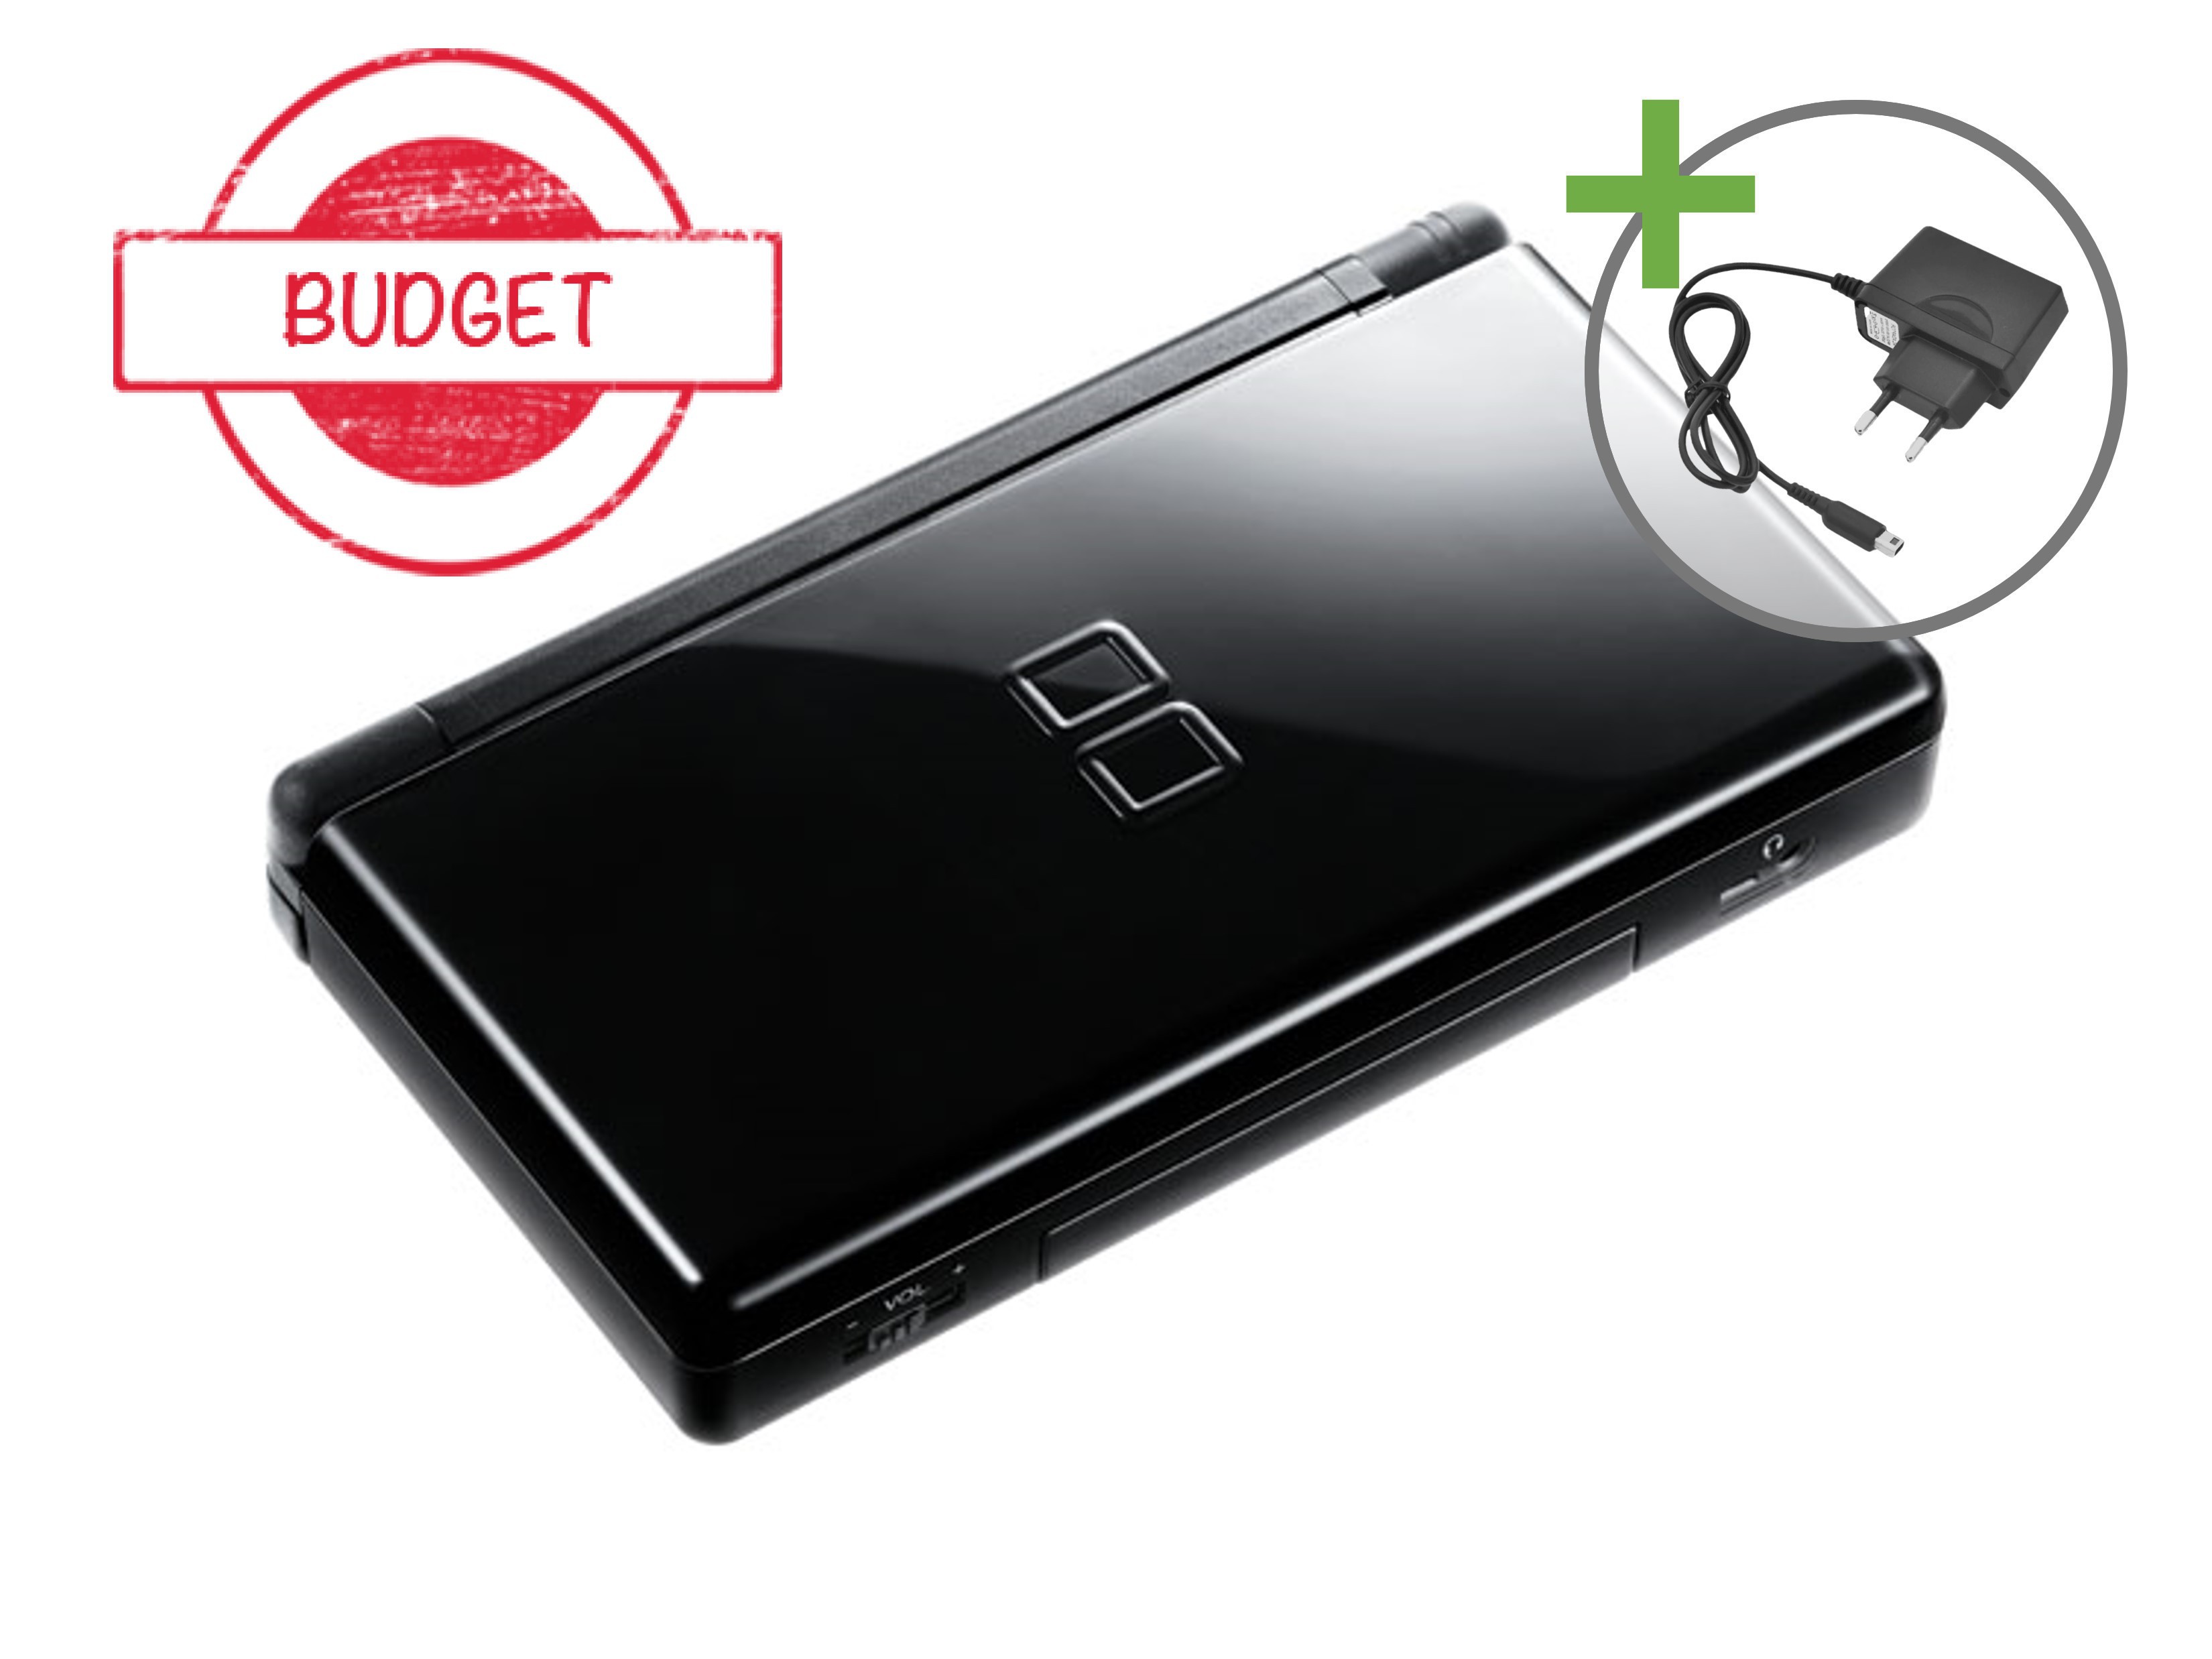 Nintendo DS Lite - Black (Cobalt) - Budget - Nintendo DS Hardware - 3